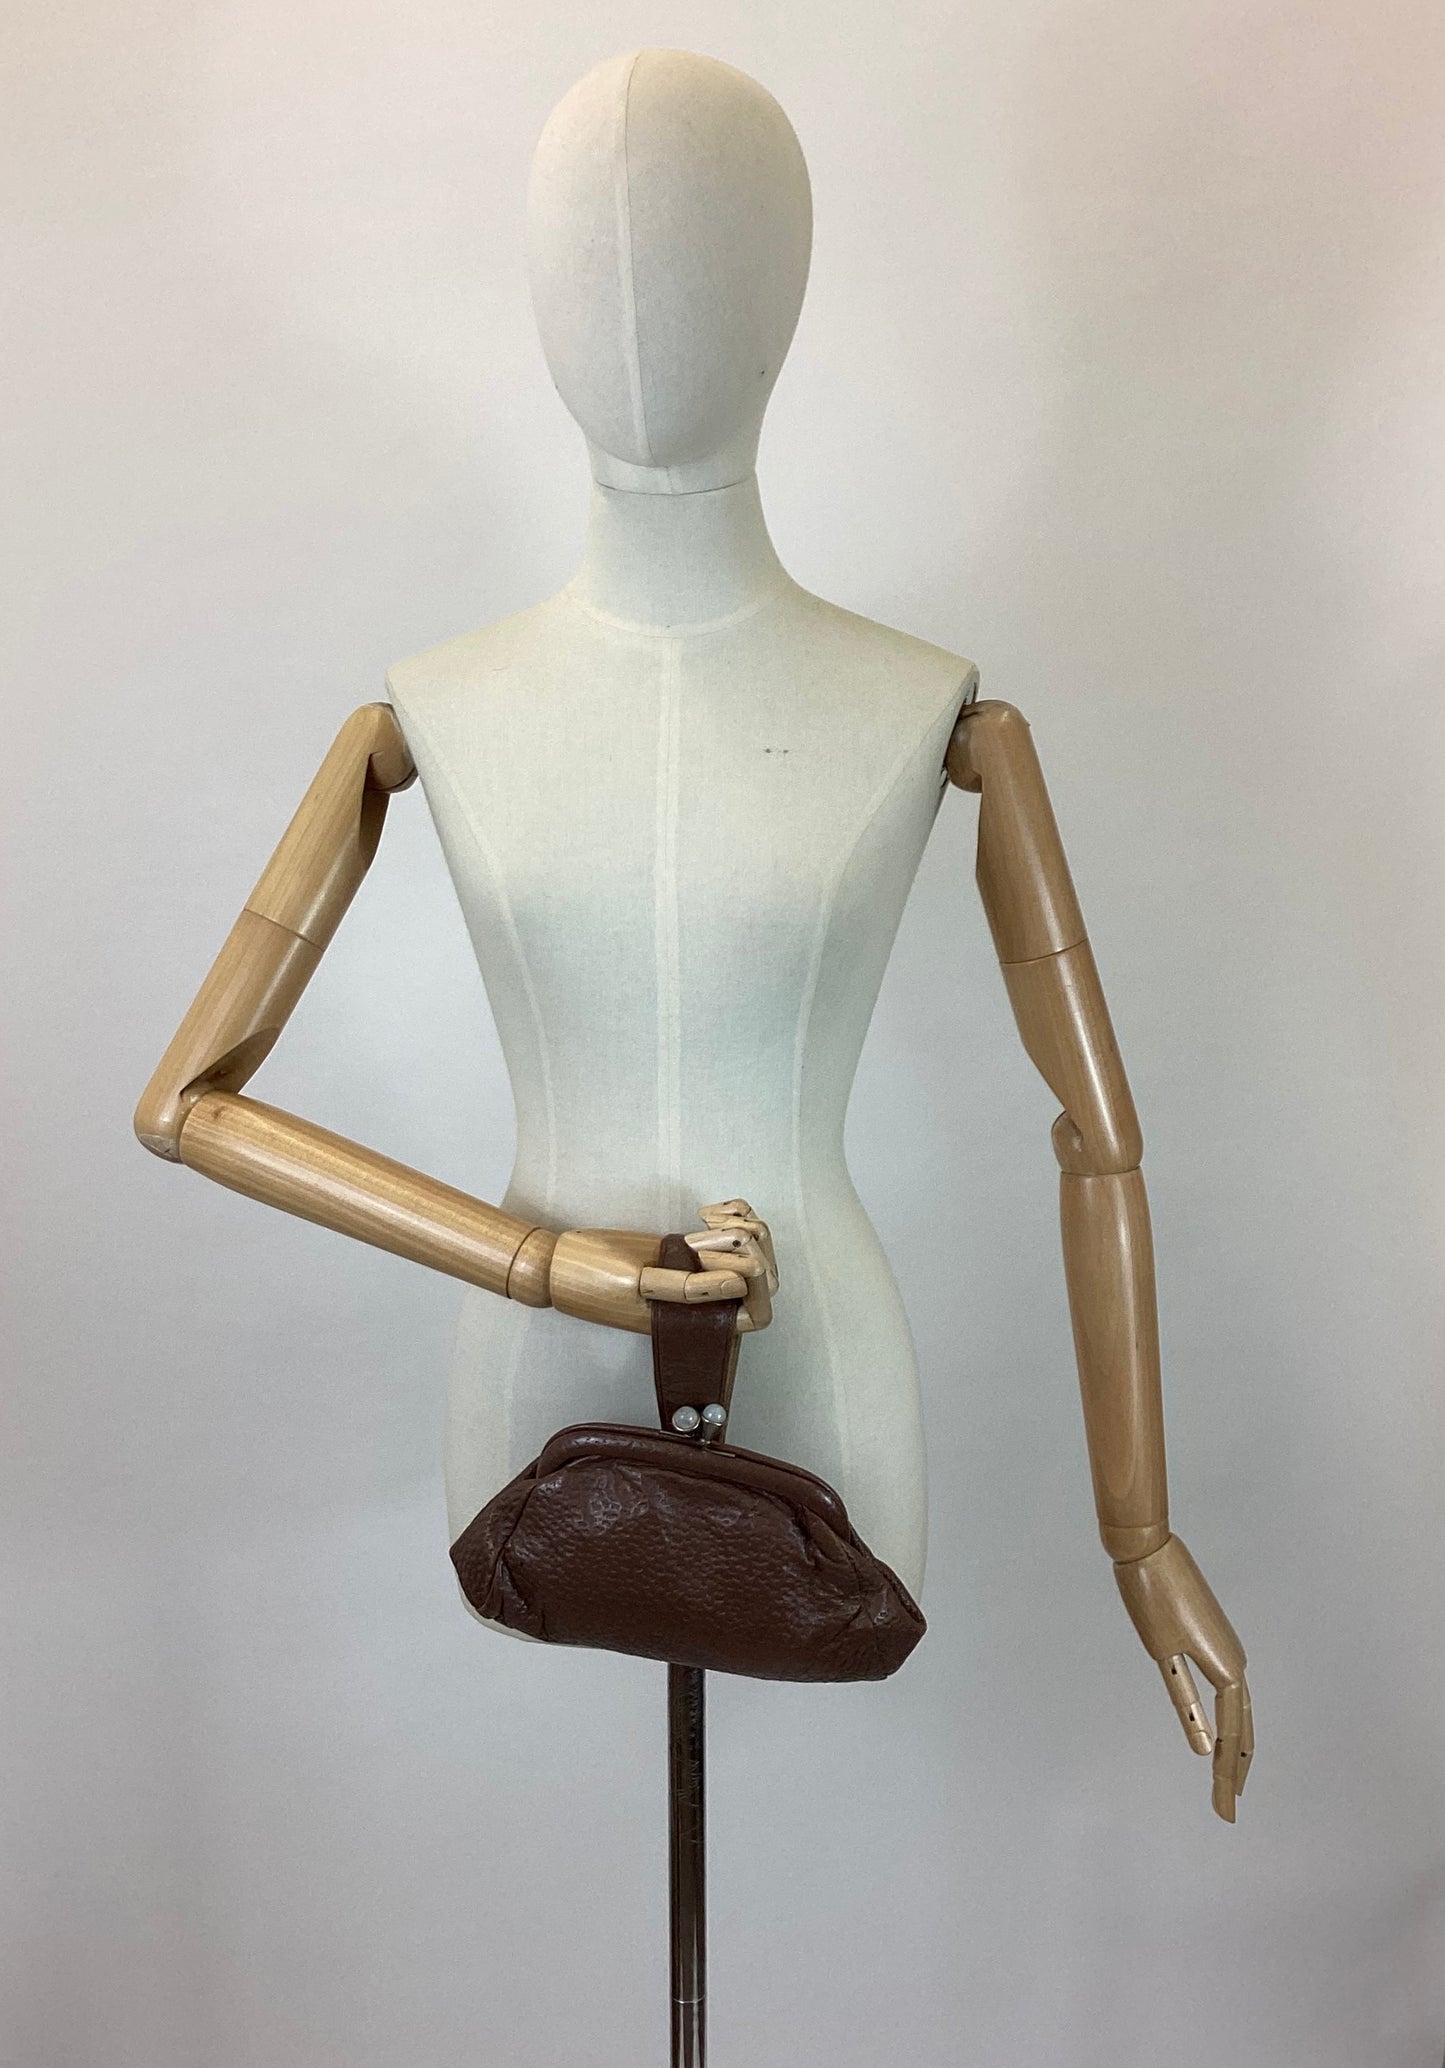 Original 40s/50s Ostrich leather handbag - in a pale mud brown shade